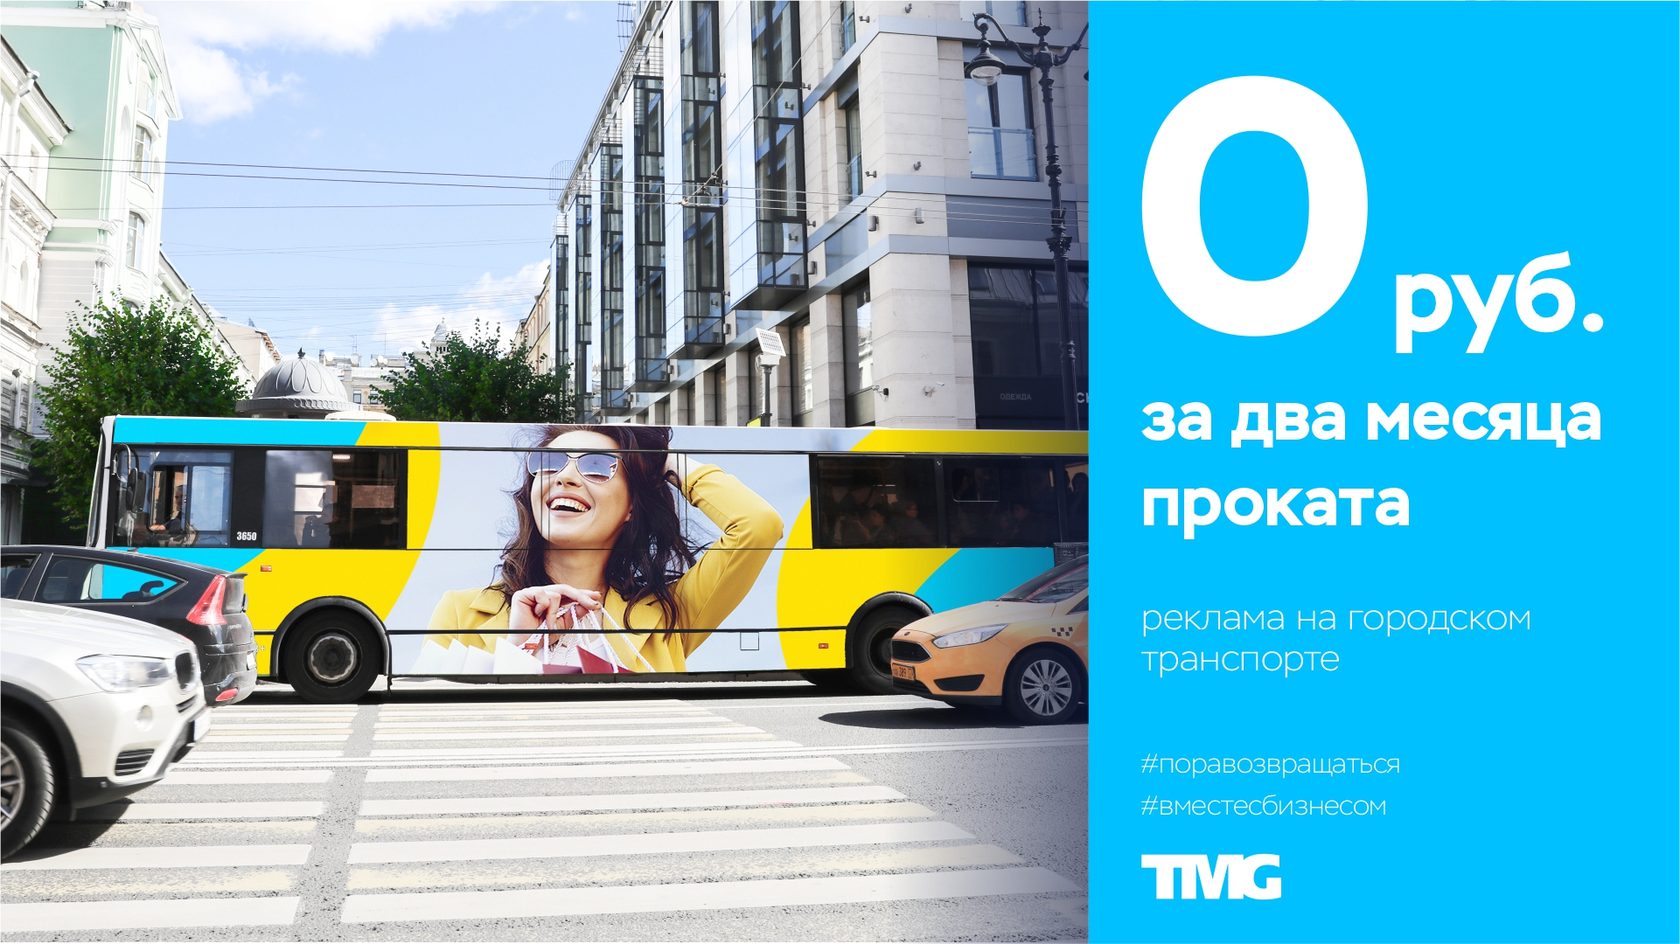 Прокат реклама. Реклама для автопроката форматом а2. #Рекламный борт от 2300 руб TMG баннер.